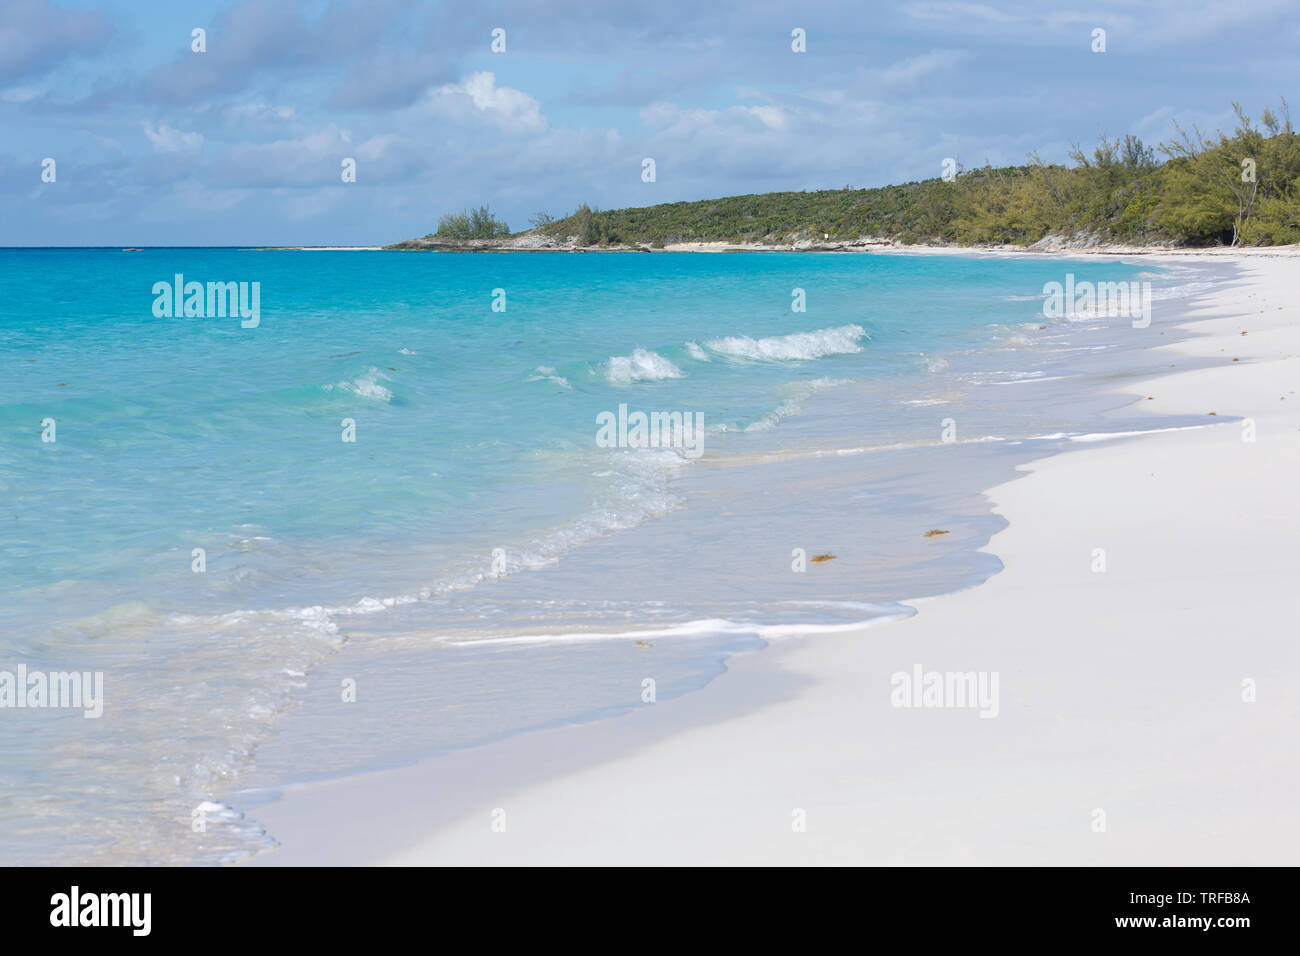 Beautiful tropical beach in the Caribbean Ocean Stock Photo